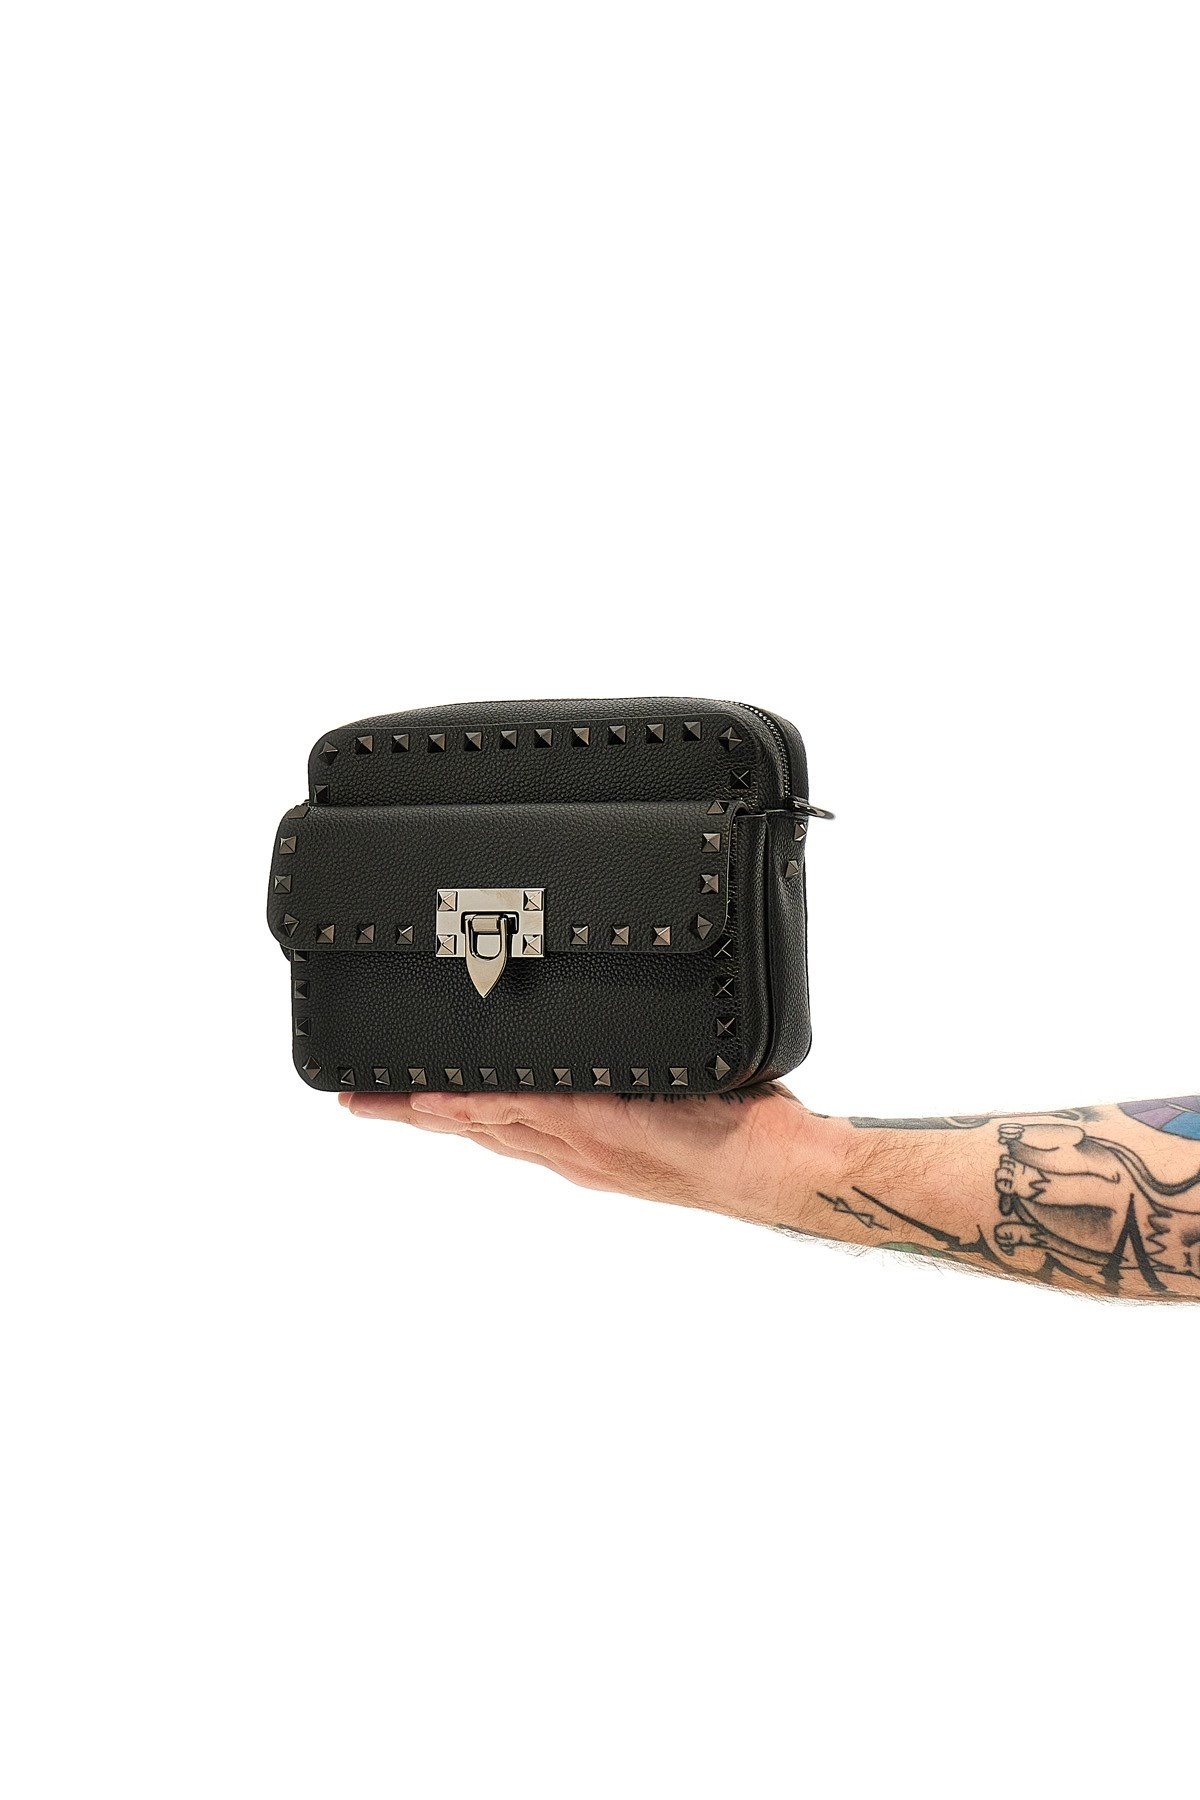 Valentino Garavani 'Rockstud' Shoulder Bag - 2